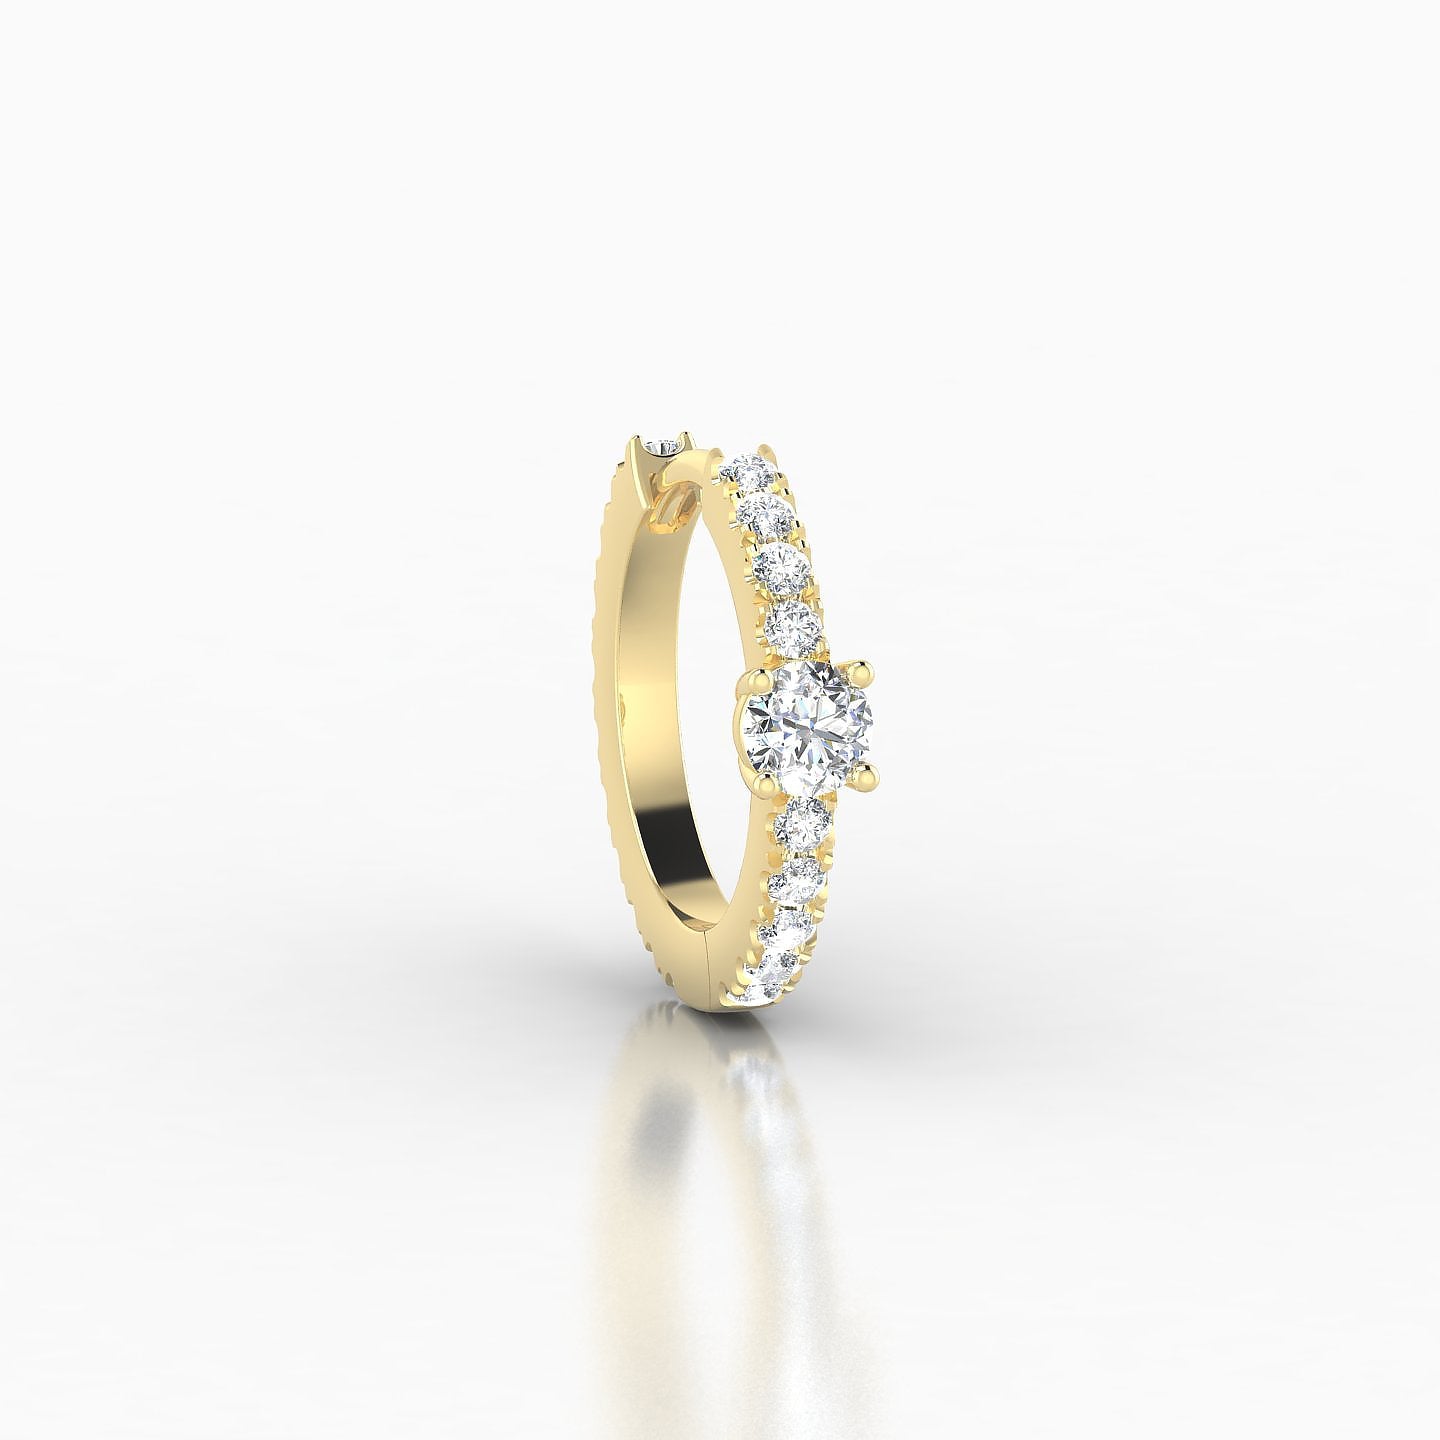 Inanna | 18k Yellow Gold 8 mm Round Diamond Nose Ring Piercing